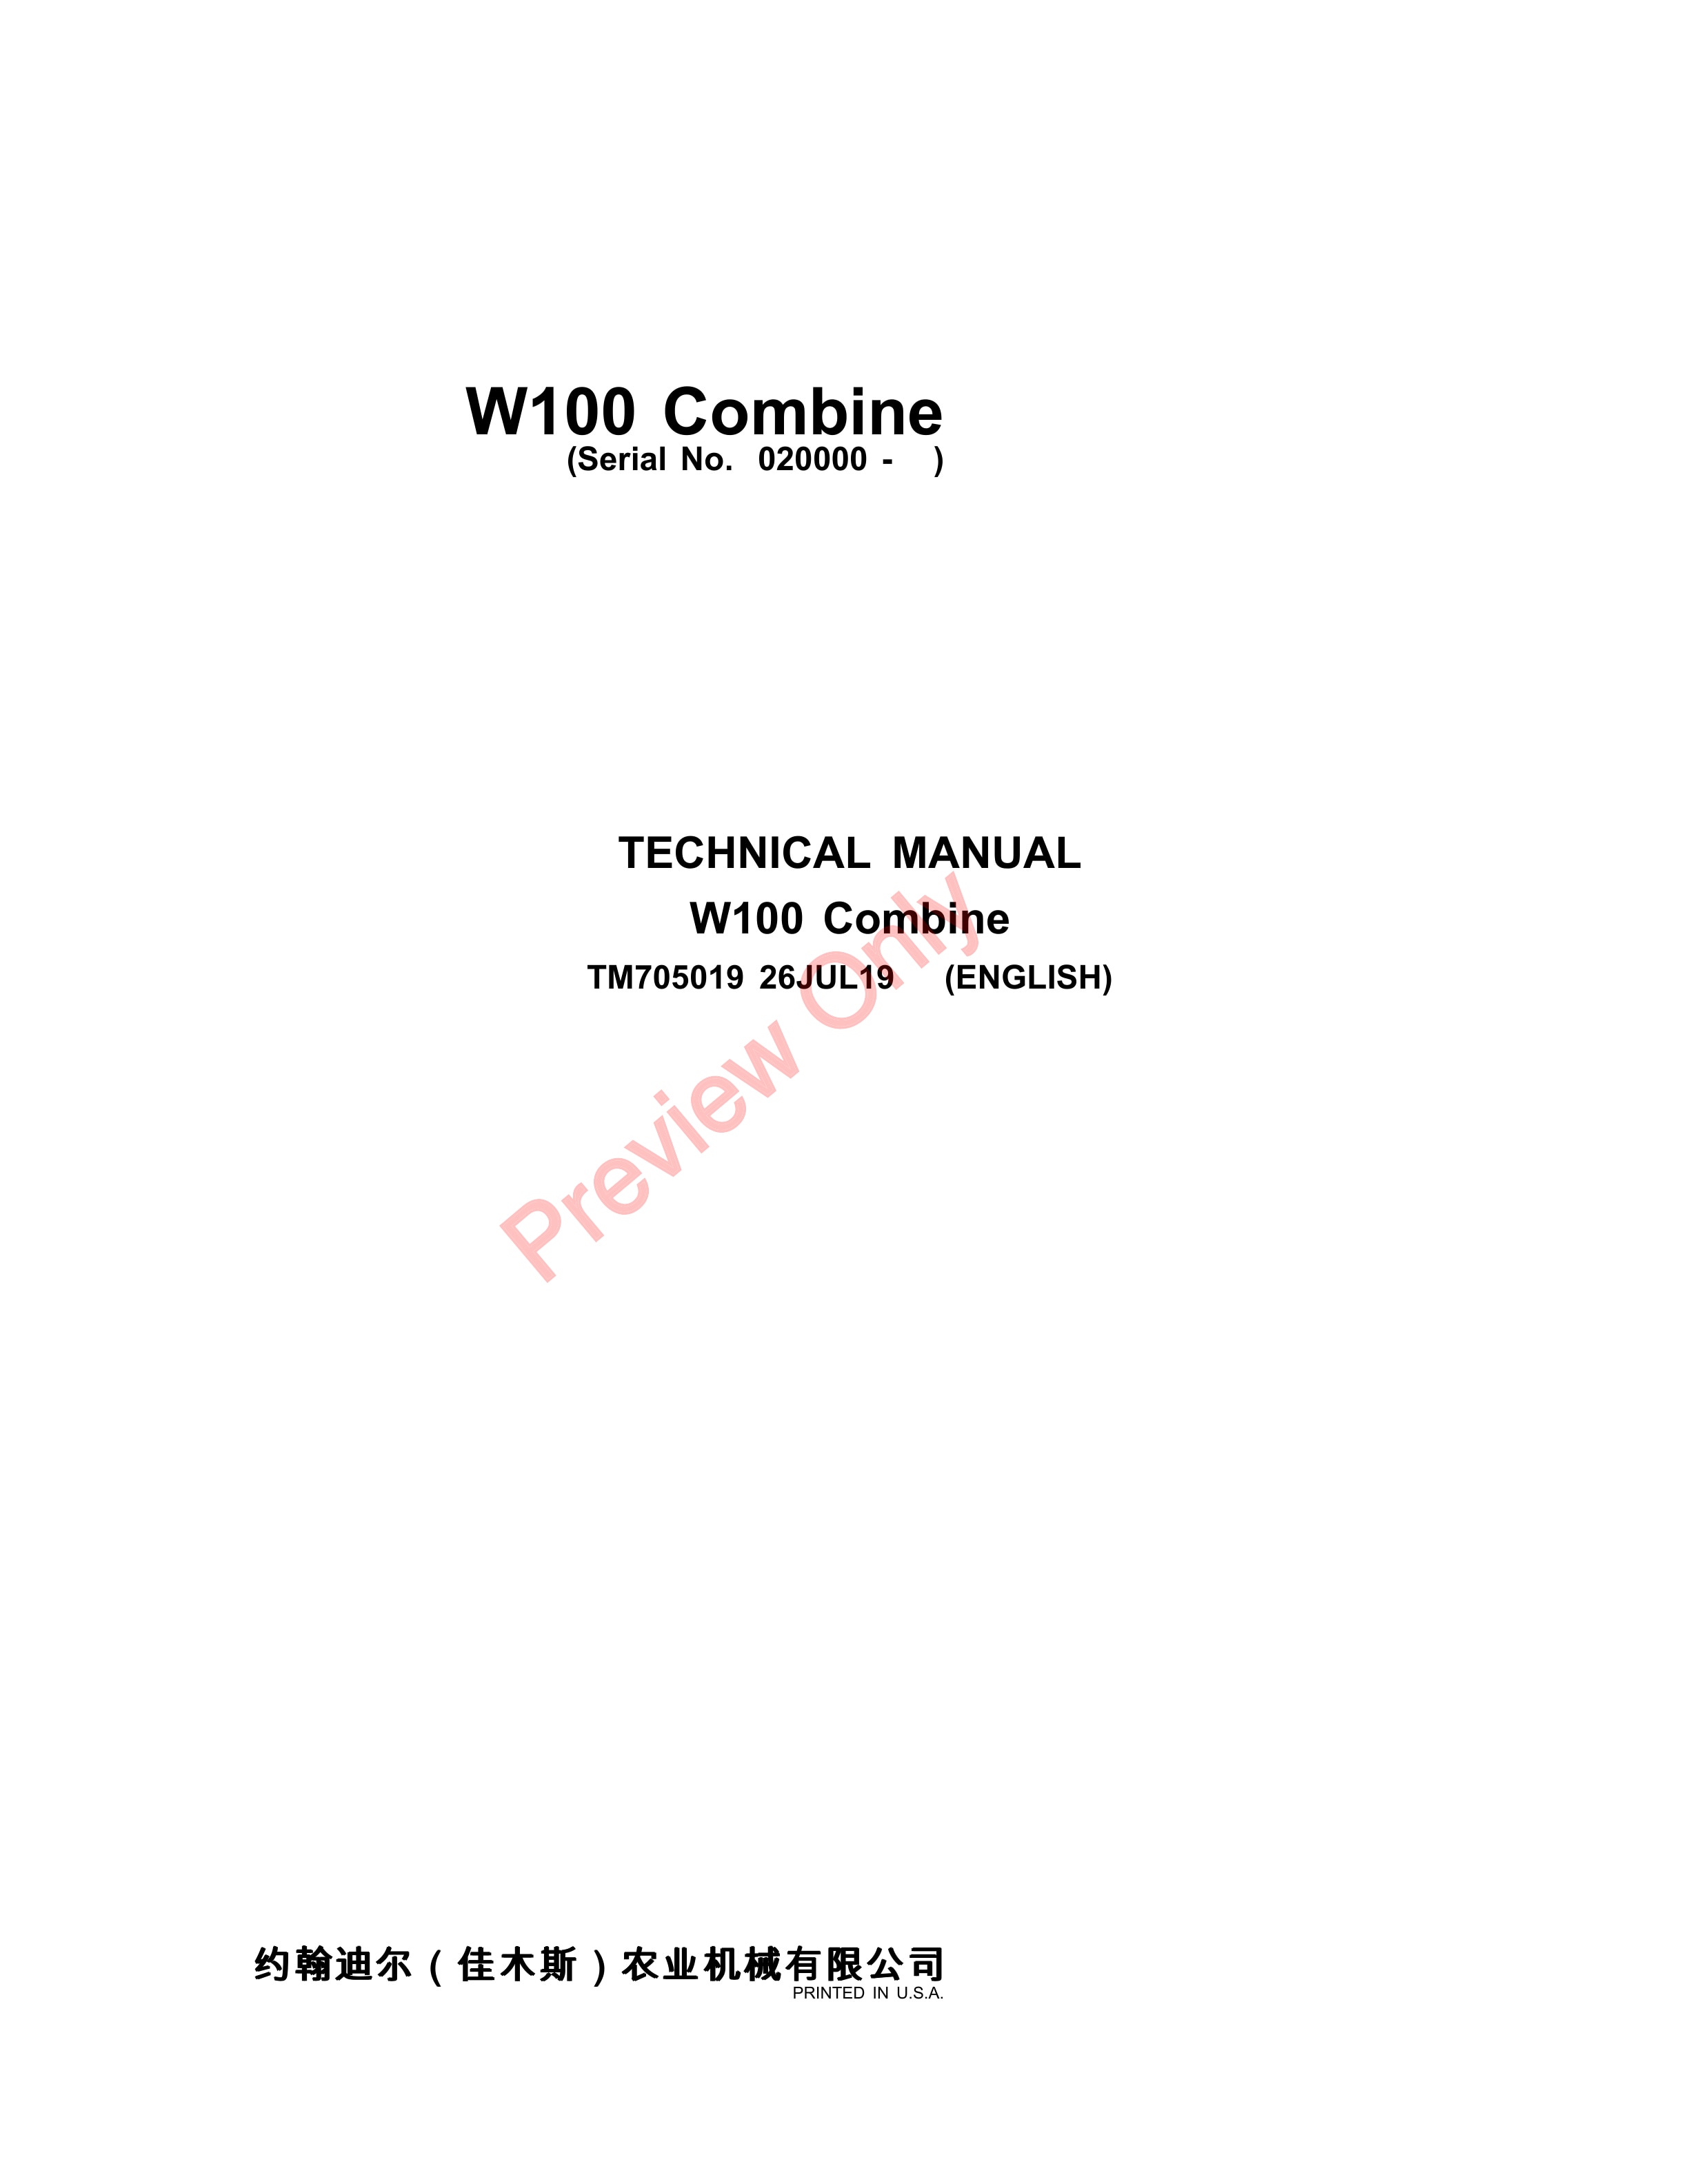 John Deere W100 Combine Technical Manual TM705019 26JUL19 1